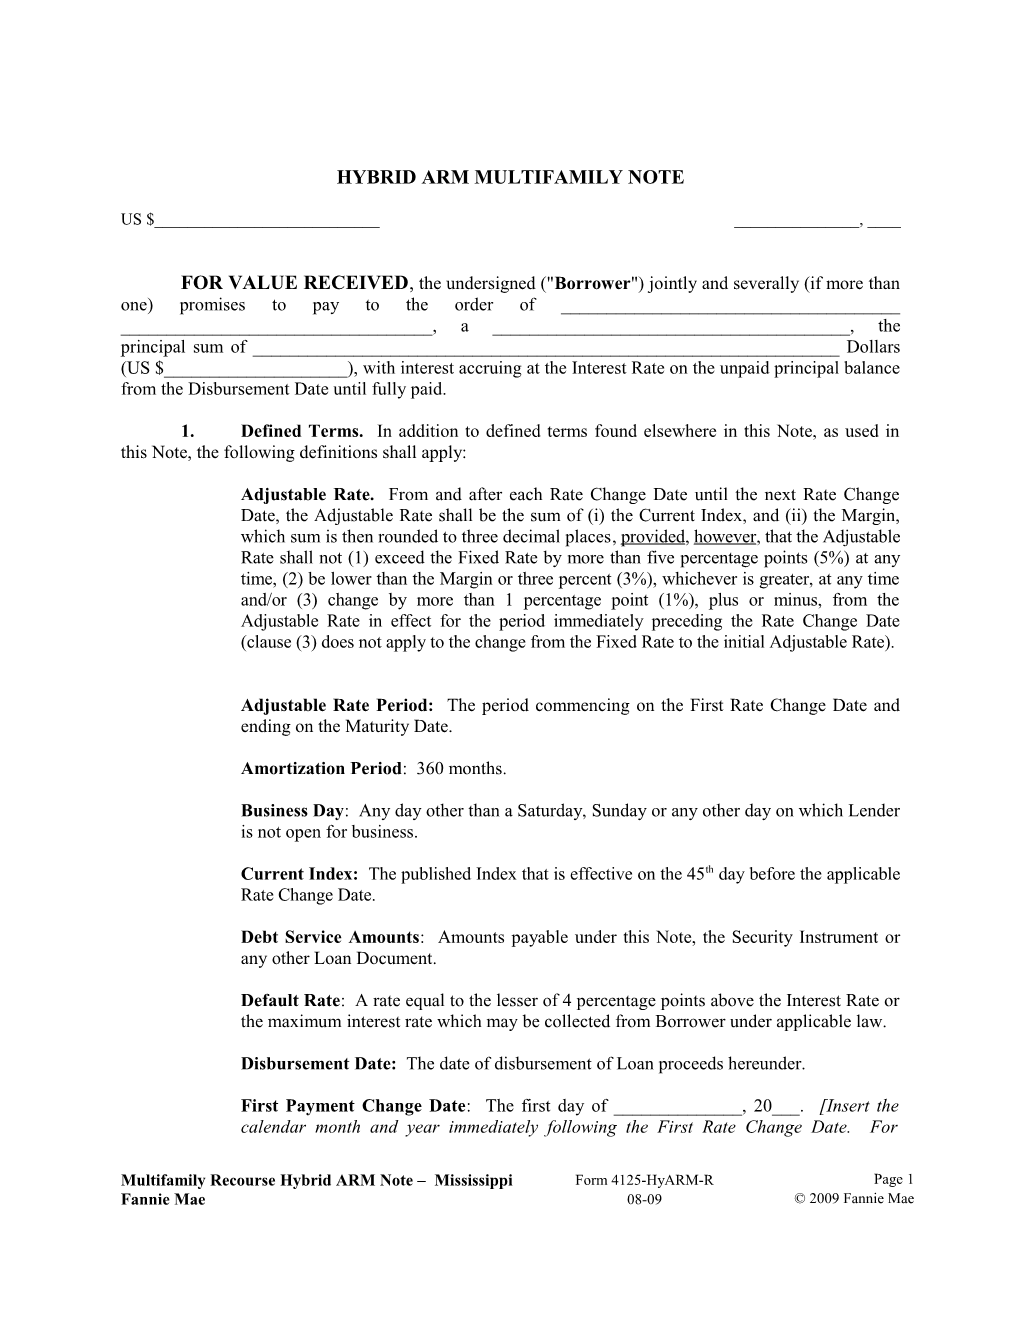 Multifamily Form 4125-Hyarm-R Mississippi